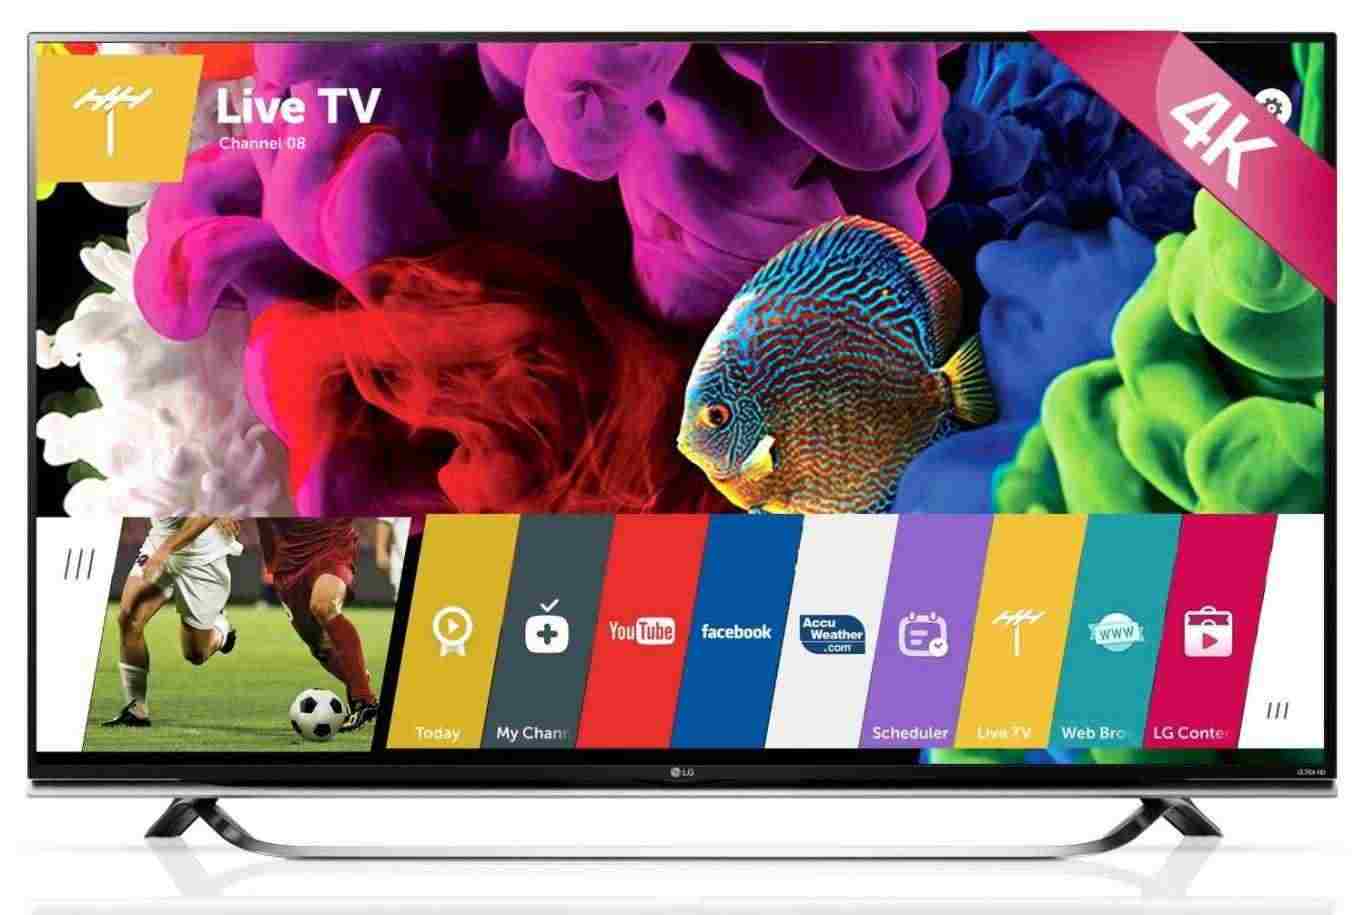 LG Super UHD 4K HDR Smart LED TV - 65" Class (64.5" Diag)